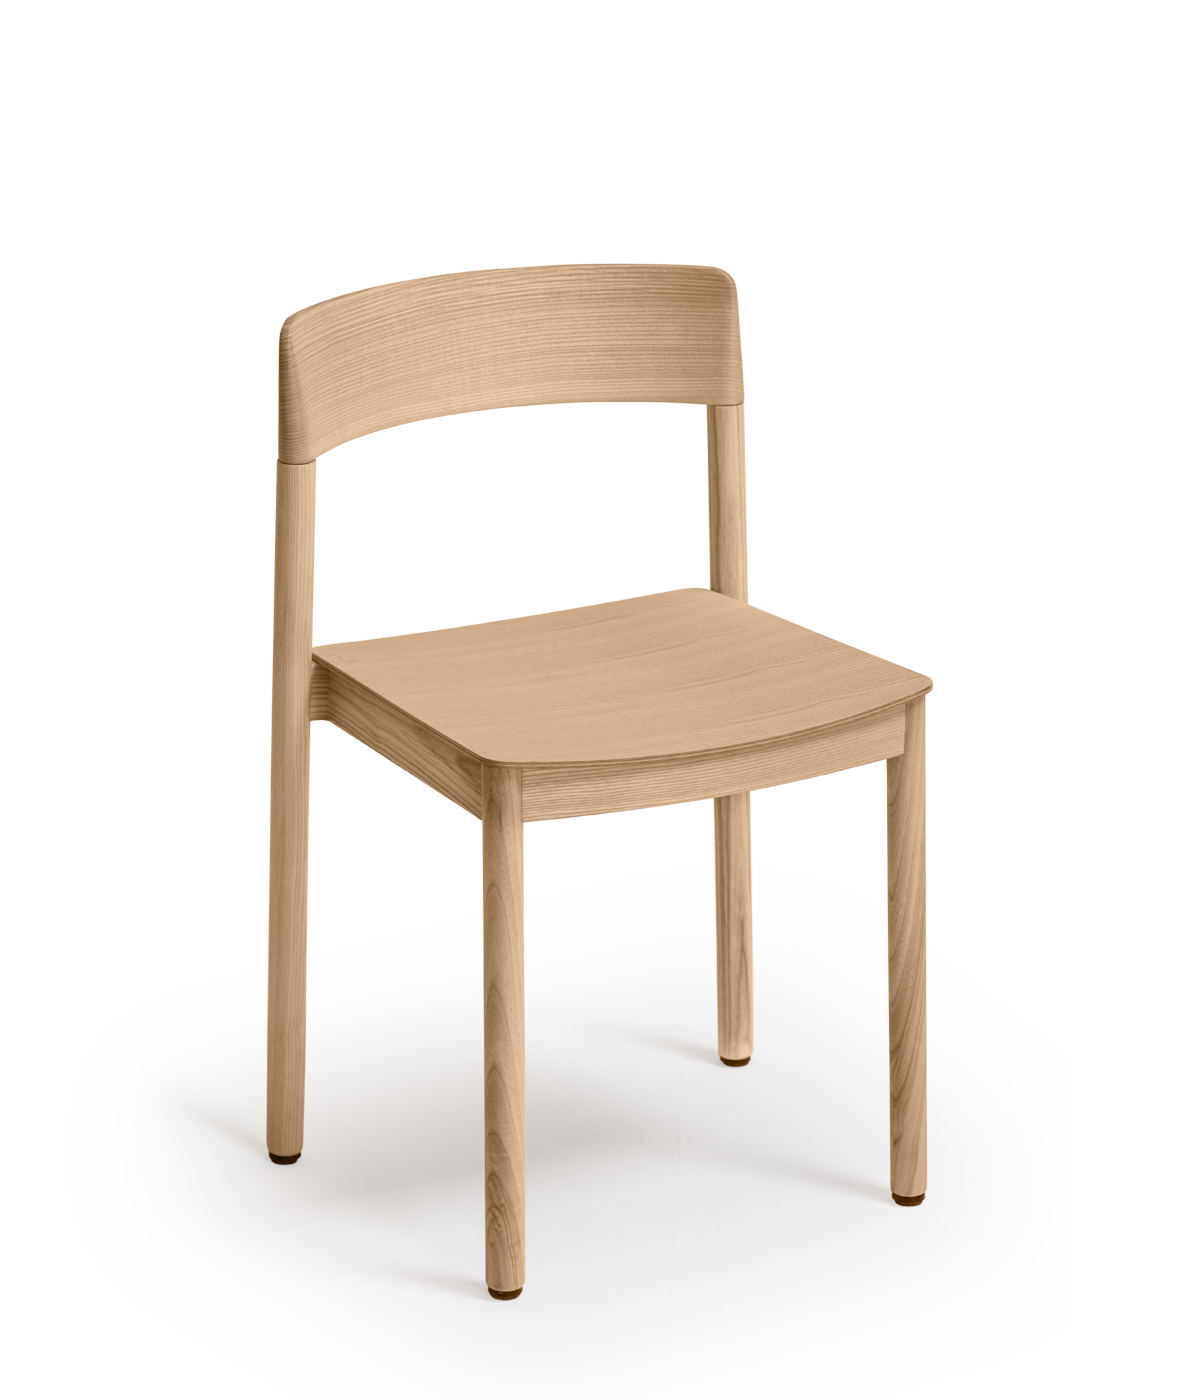 Nela chair with wooden seat - Vergés